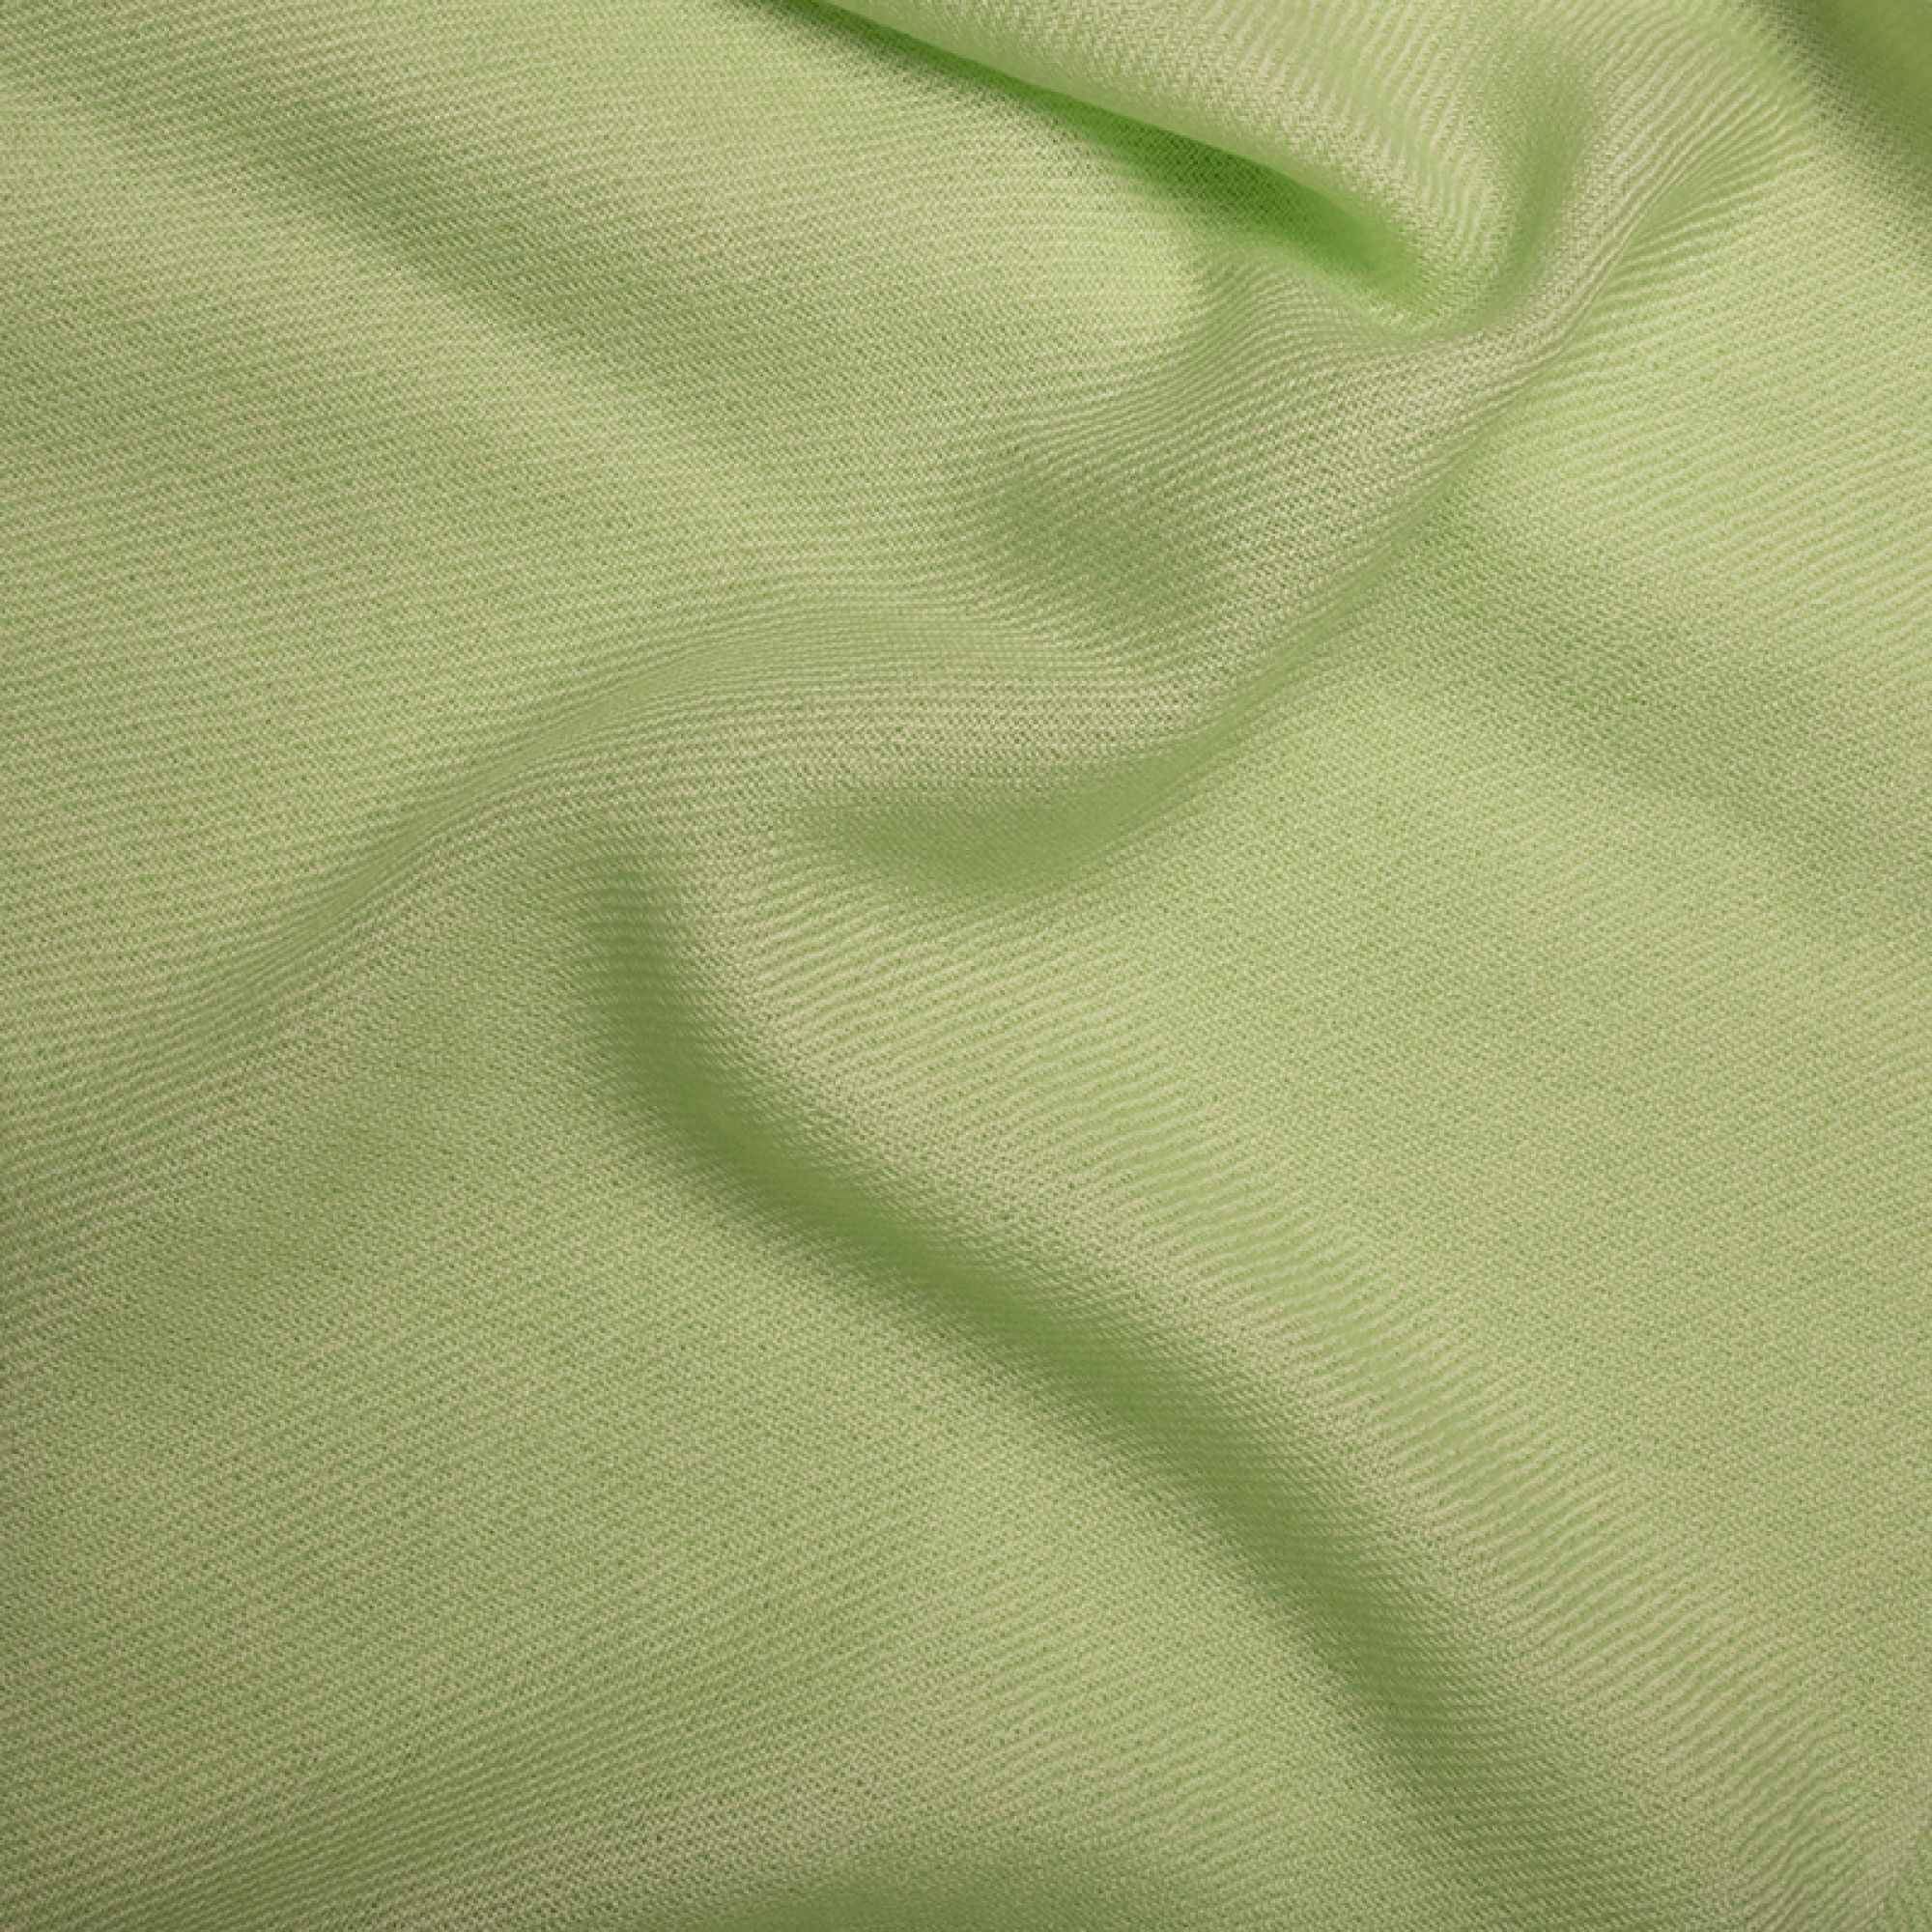 Cashmere accessoires neu toodoo plain s 140 x 200 helles grun 140 x 200 cm